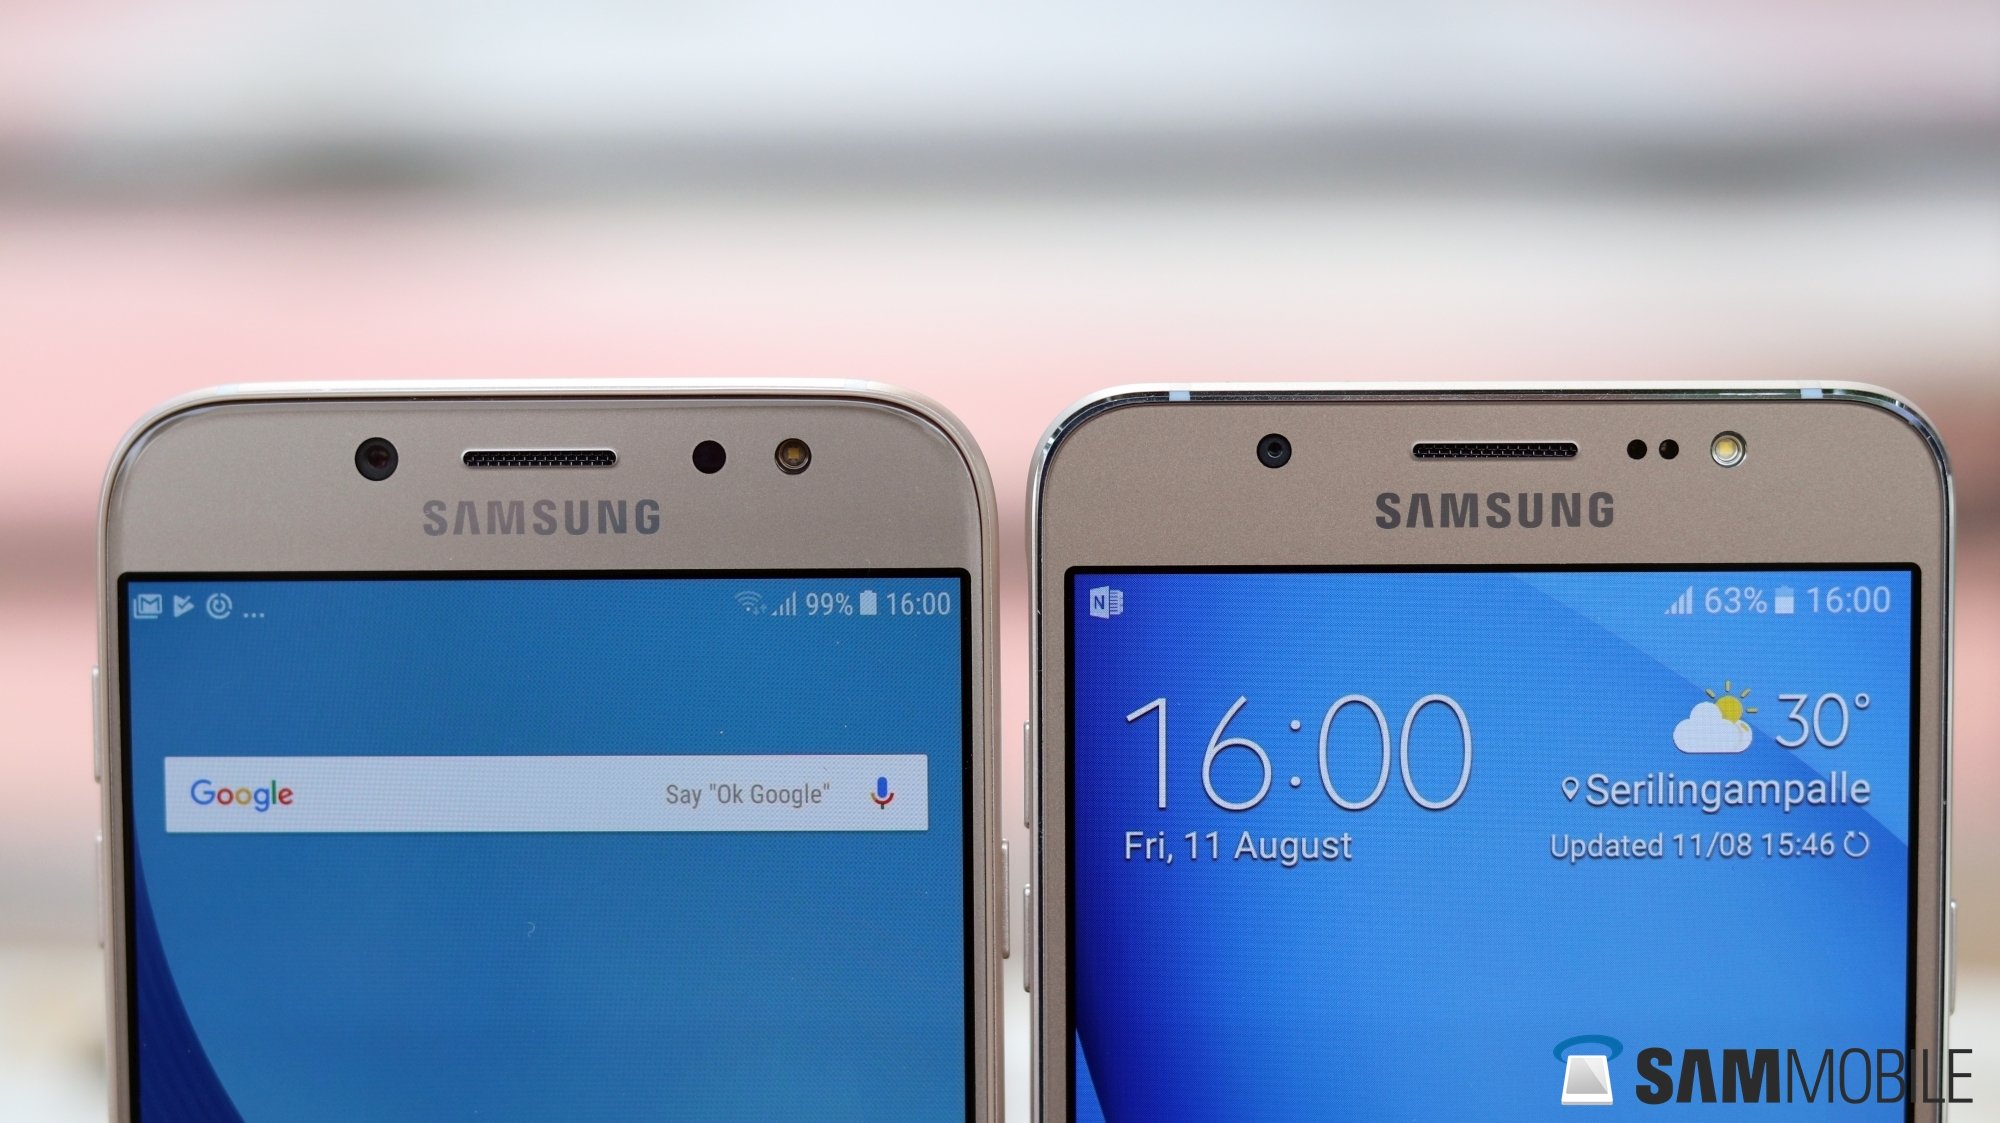 Samsung Galaxy J7 17 Vs Galaxy J7 16 In Pictures Sammobile